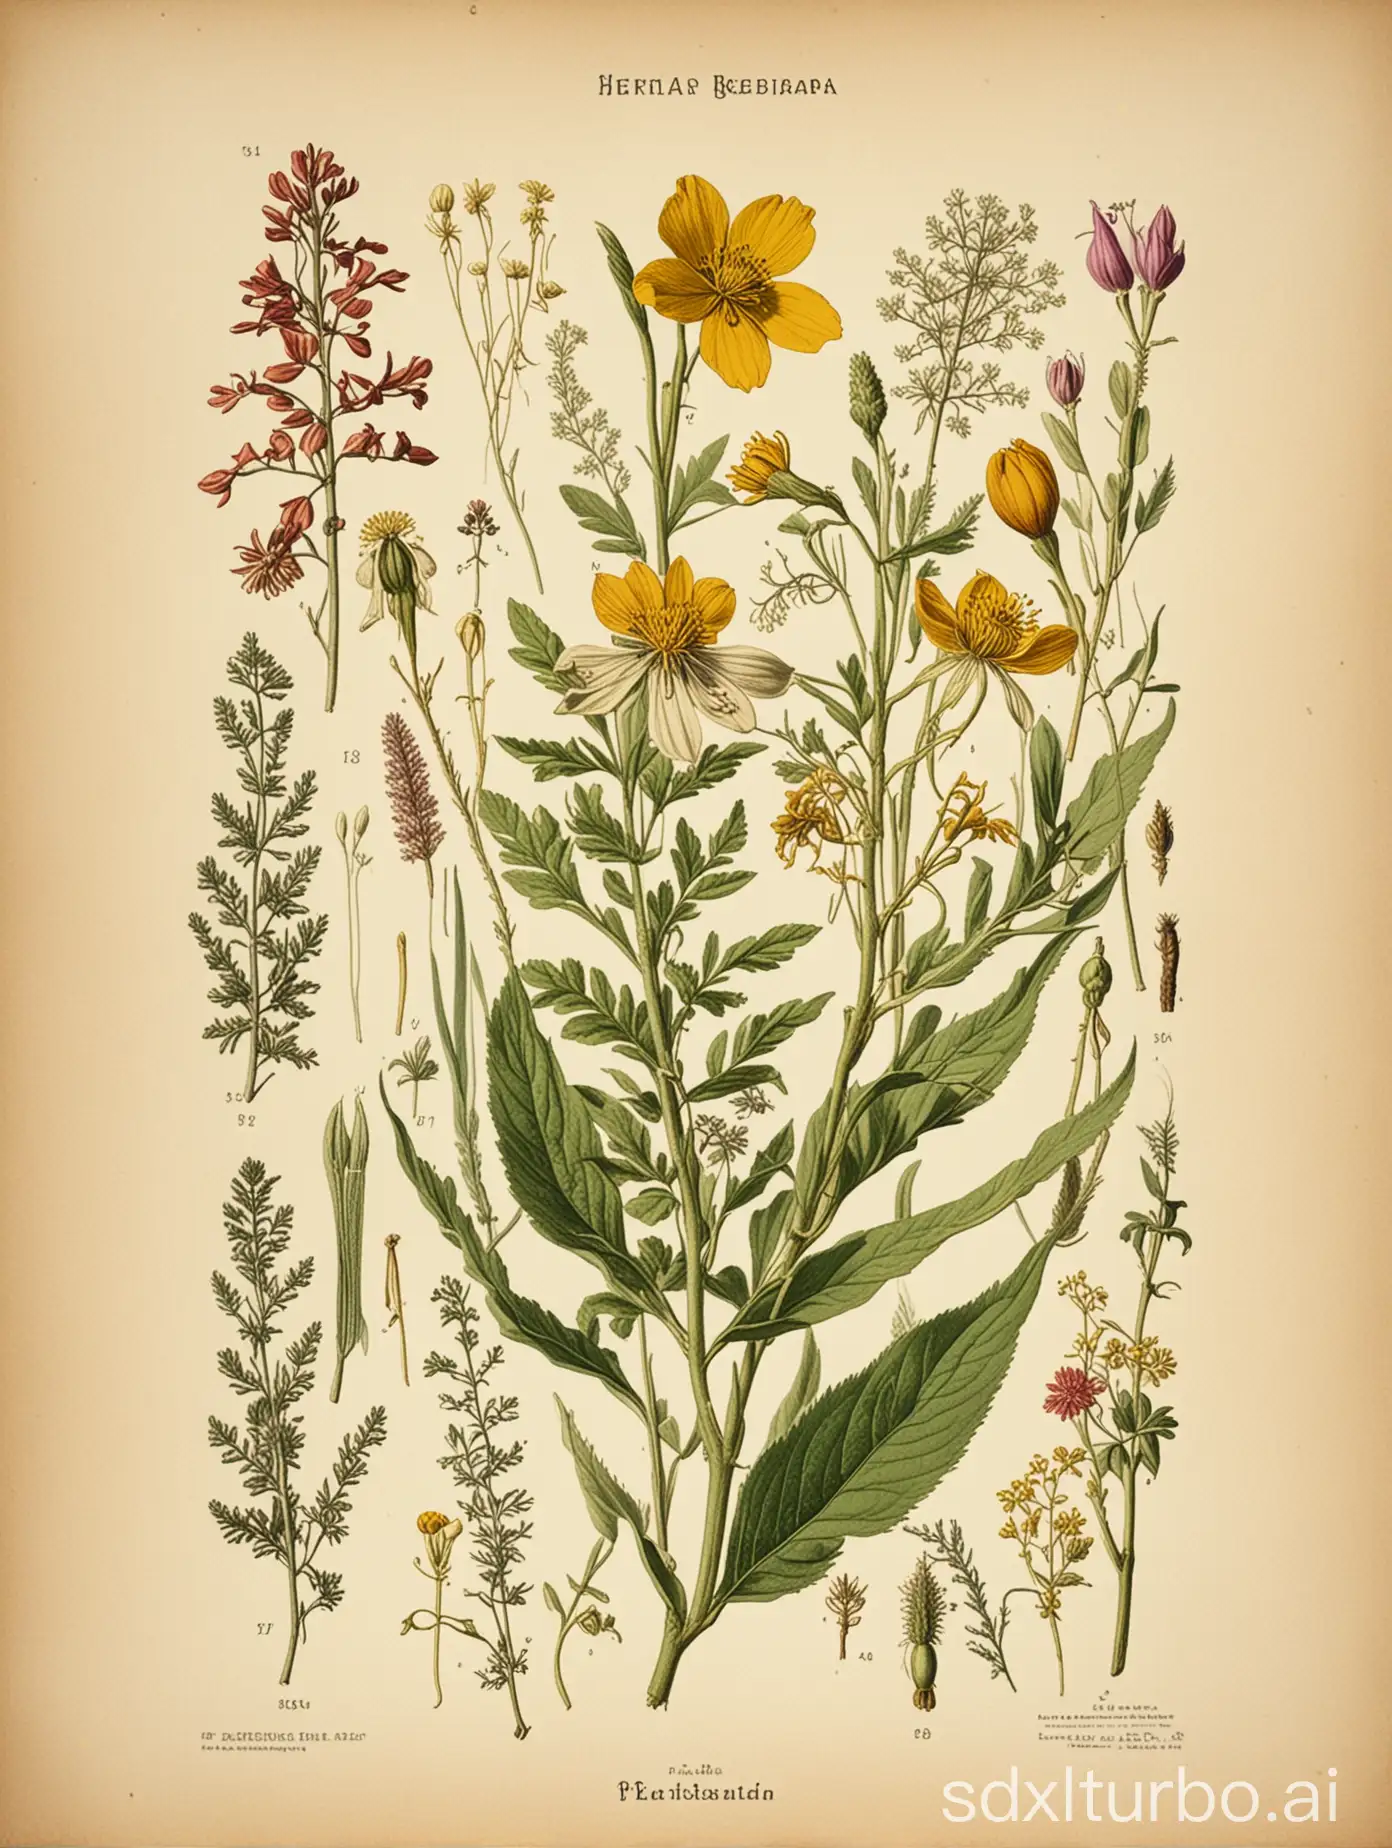 Botanical-Herbarium-Poster-Featuring-Wildflowers